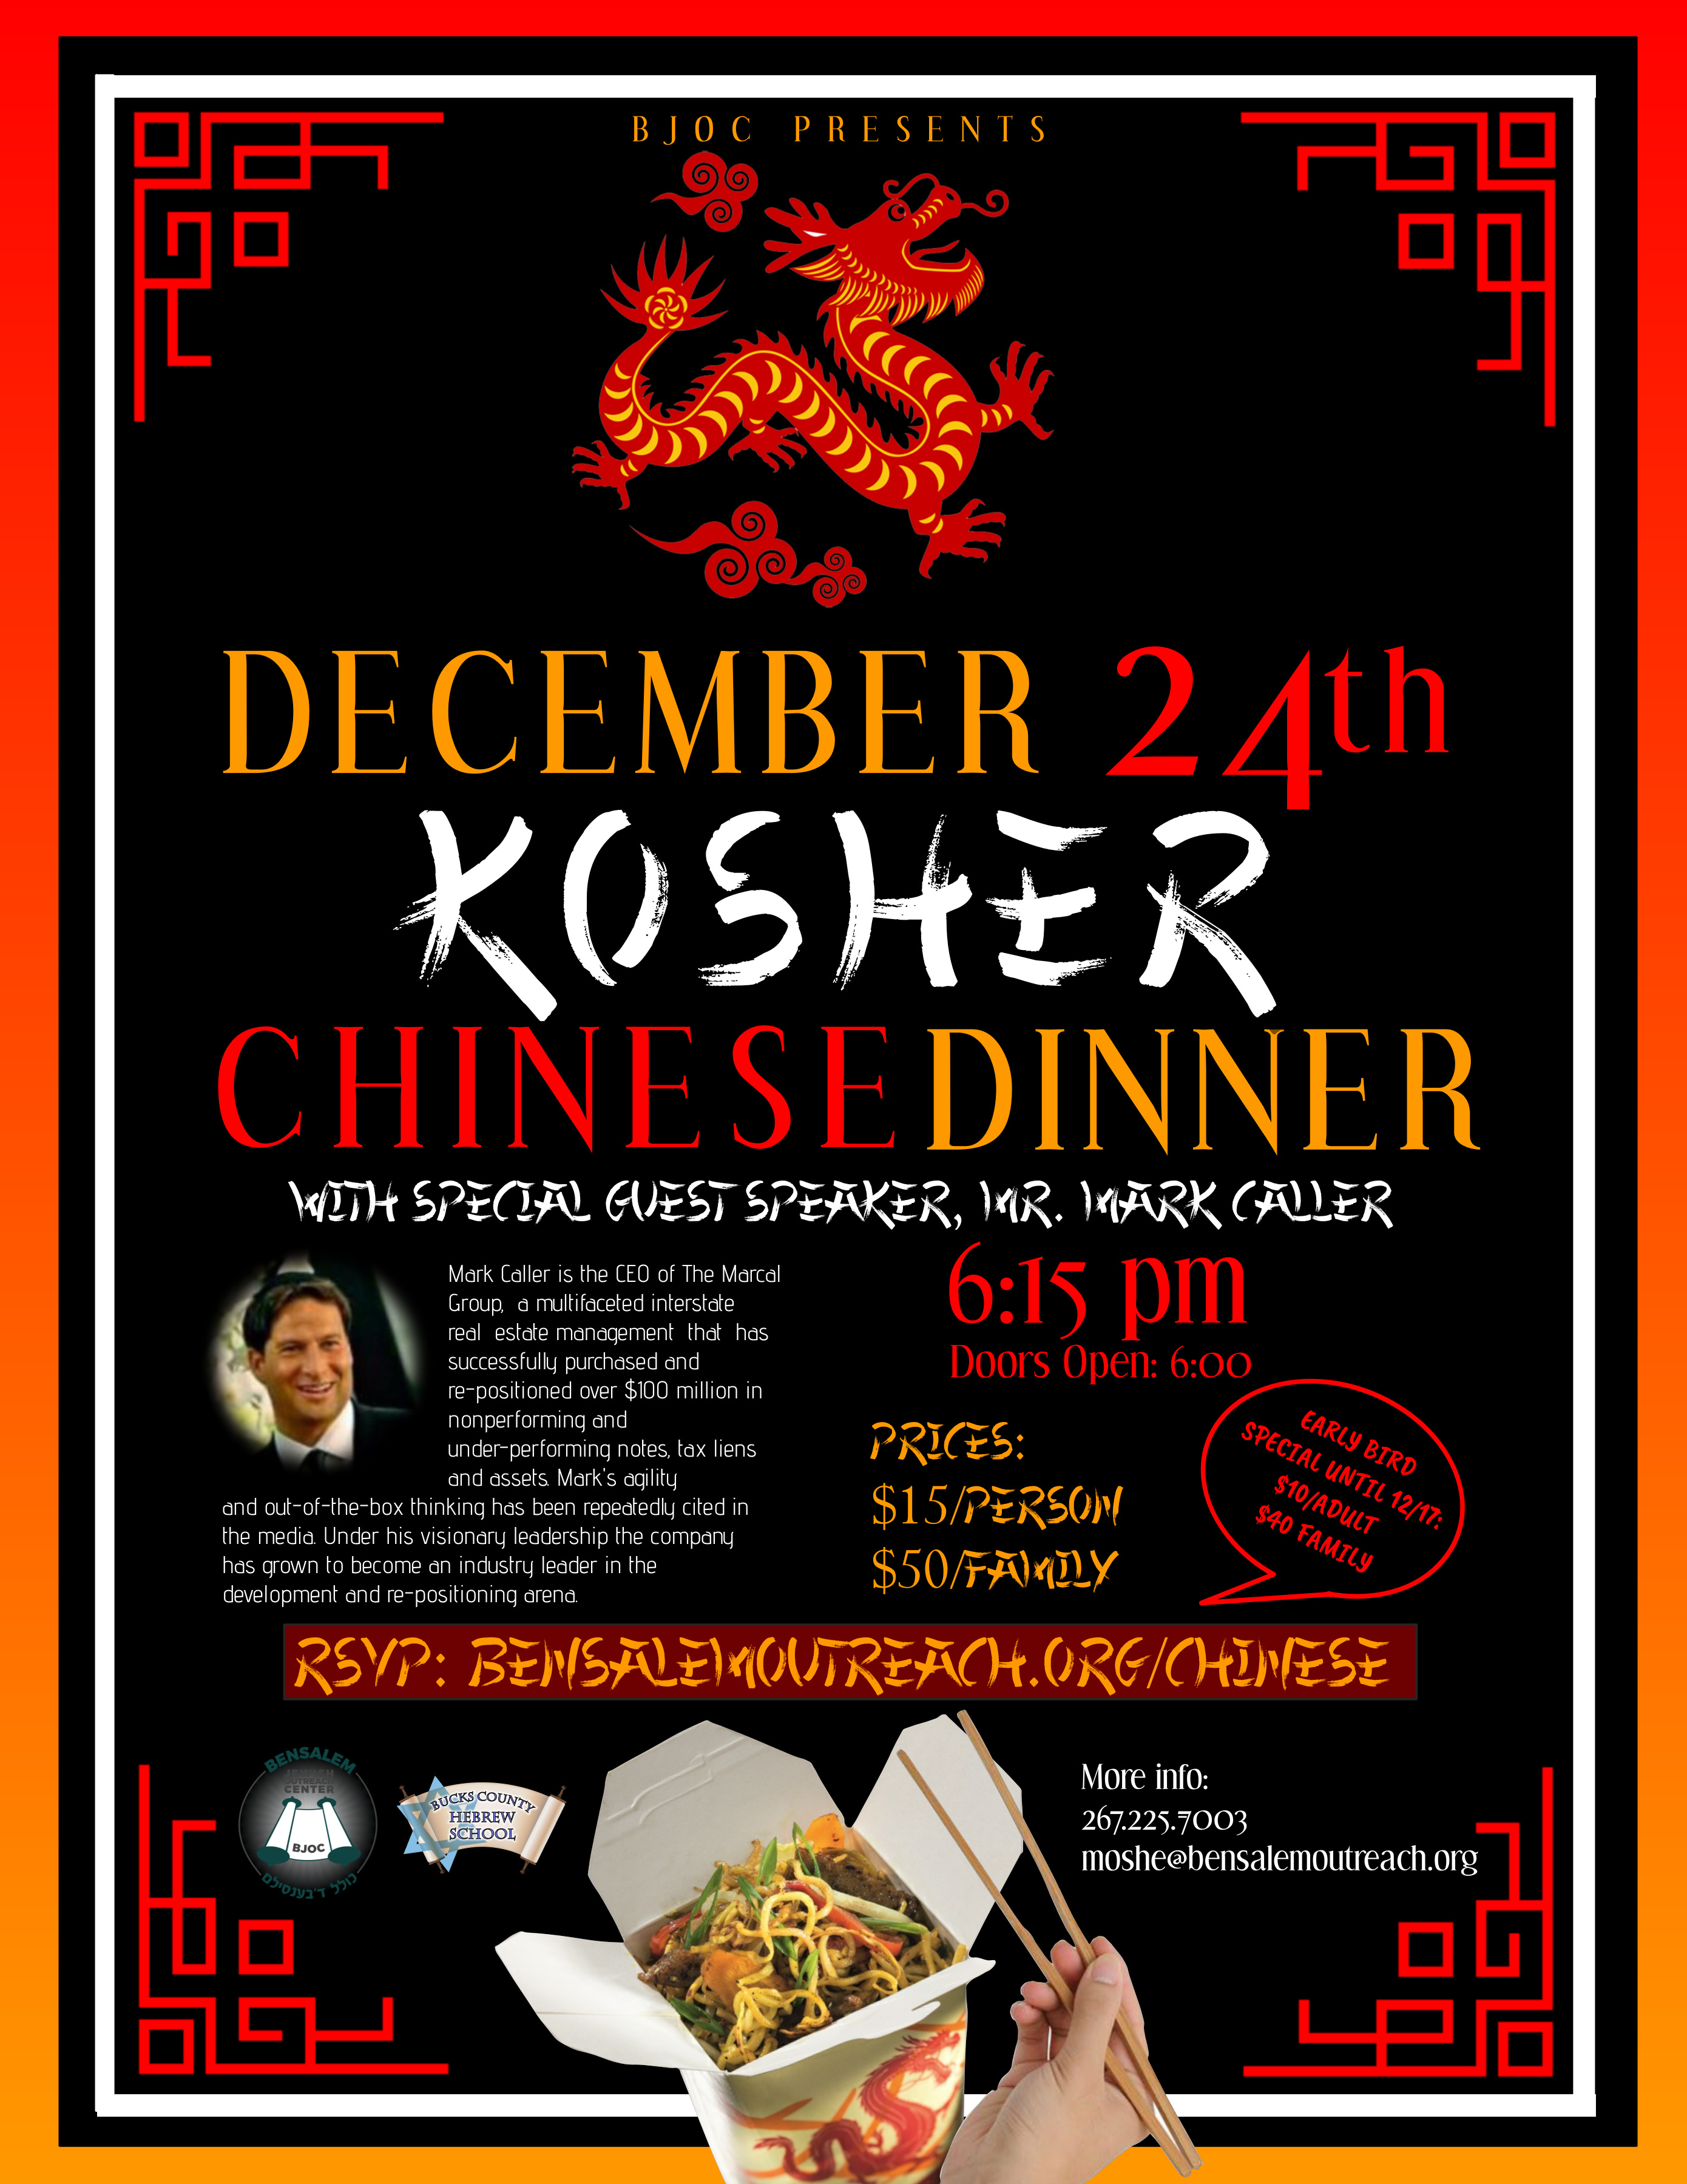 December 24th Chinese Dinner